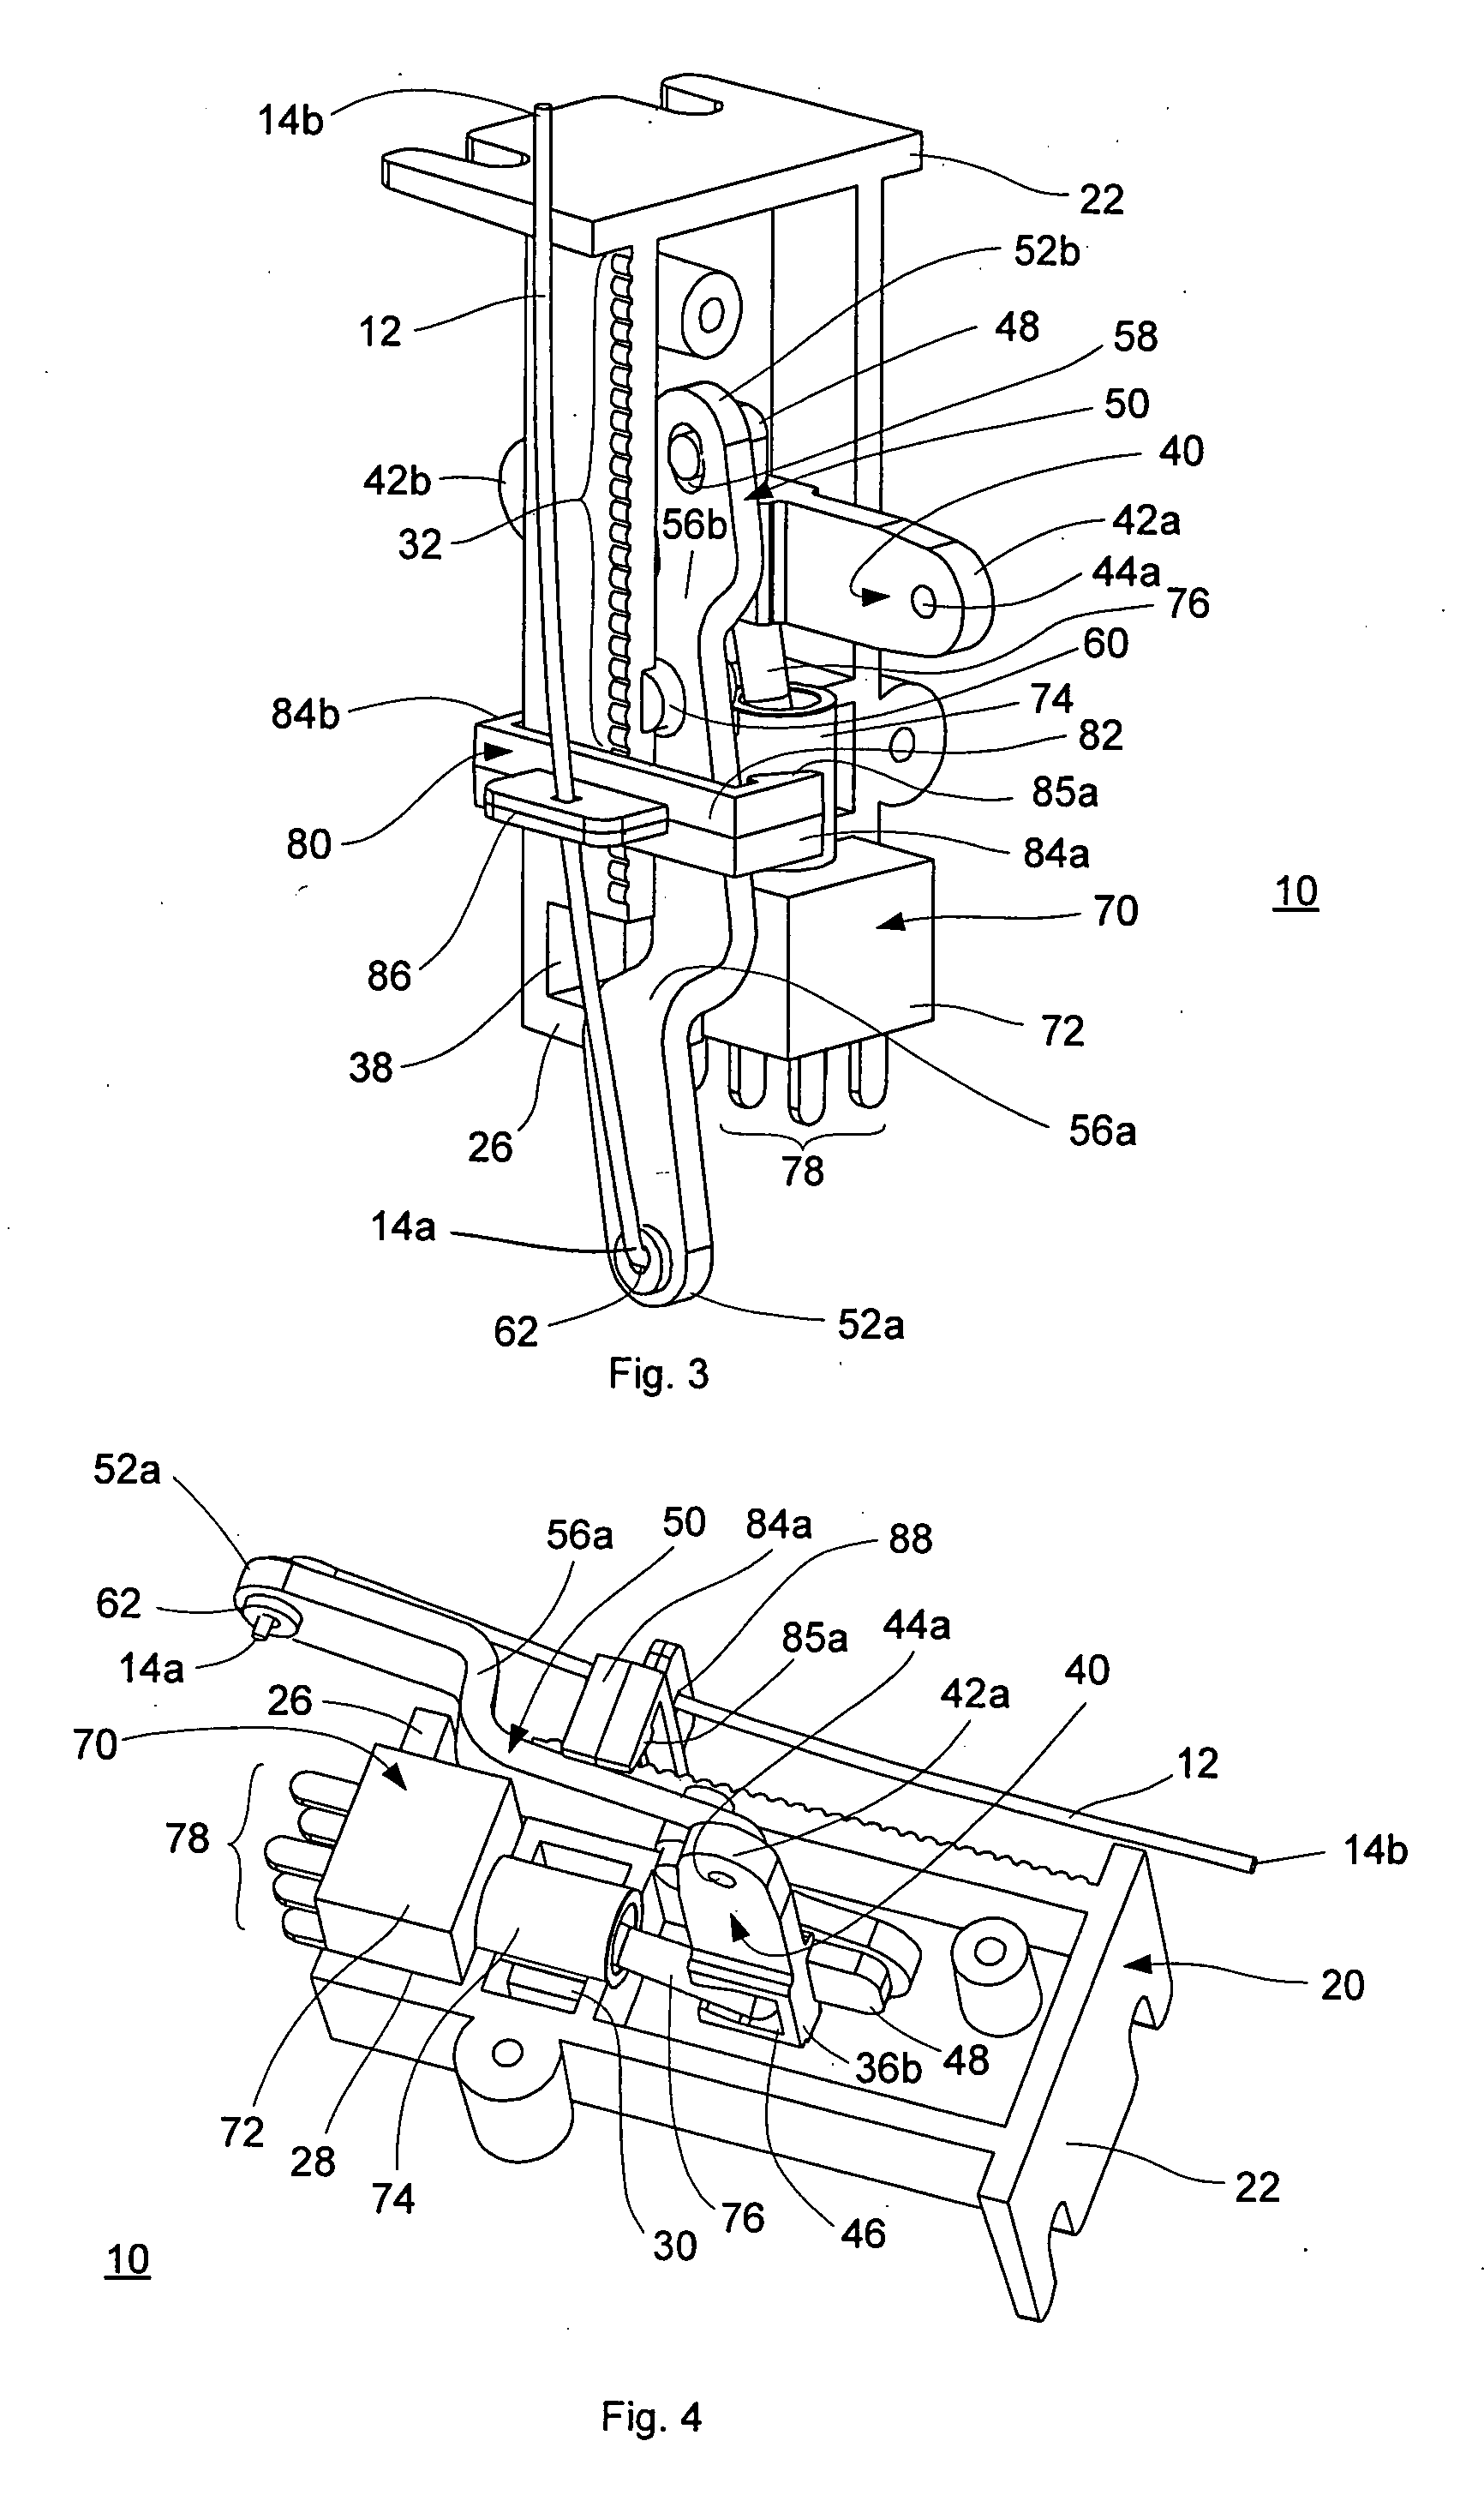 Model railroad switch actuators